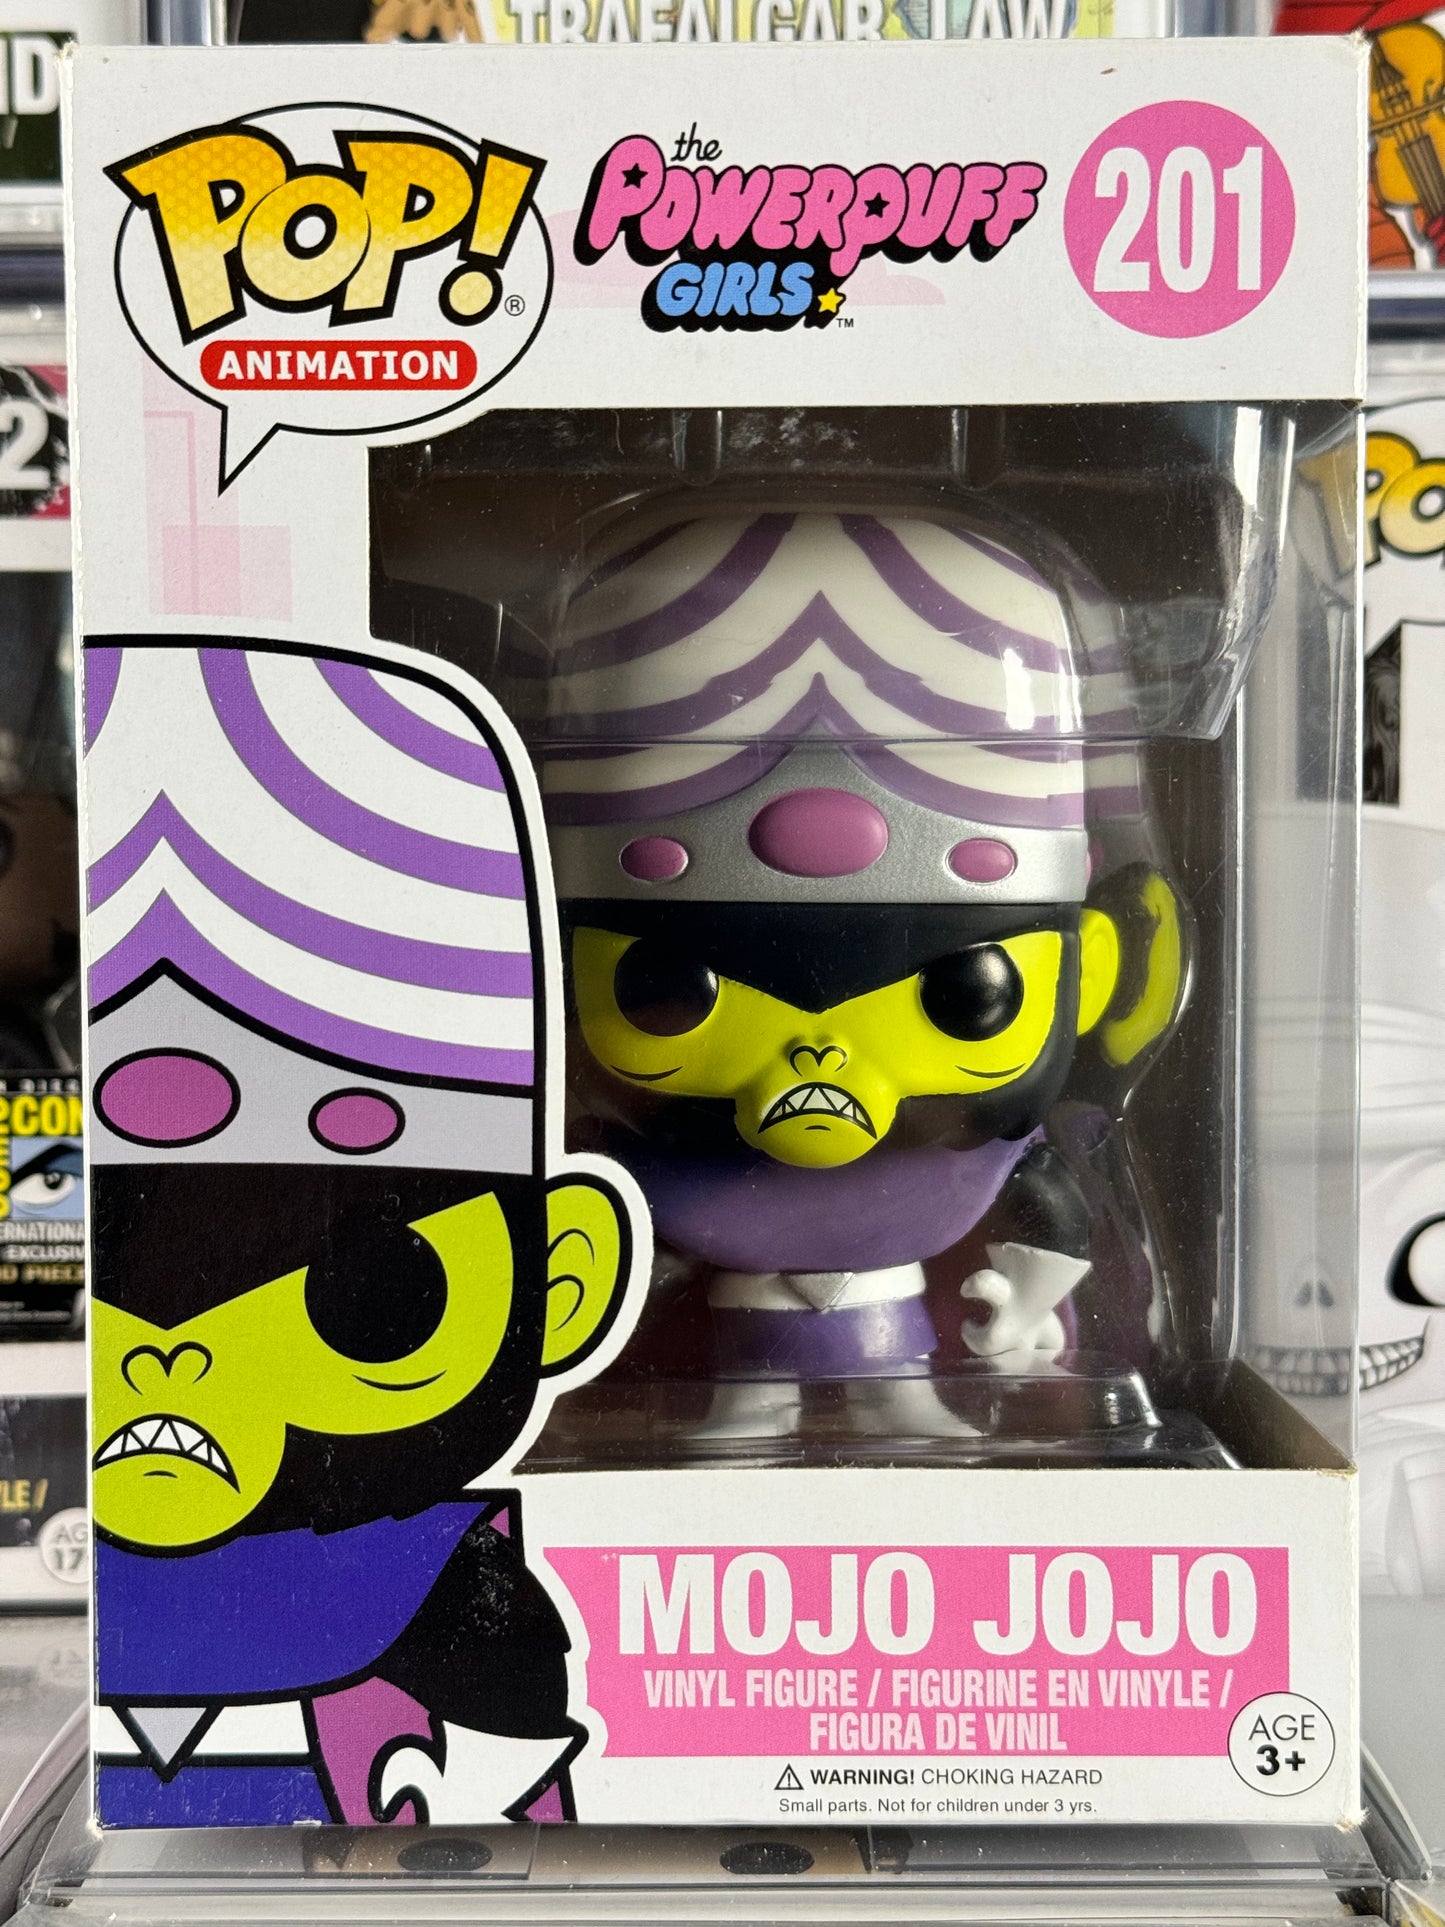 Powerpuff Girls - Mojo Jojo (201) Vaulted